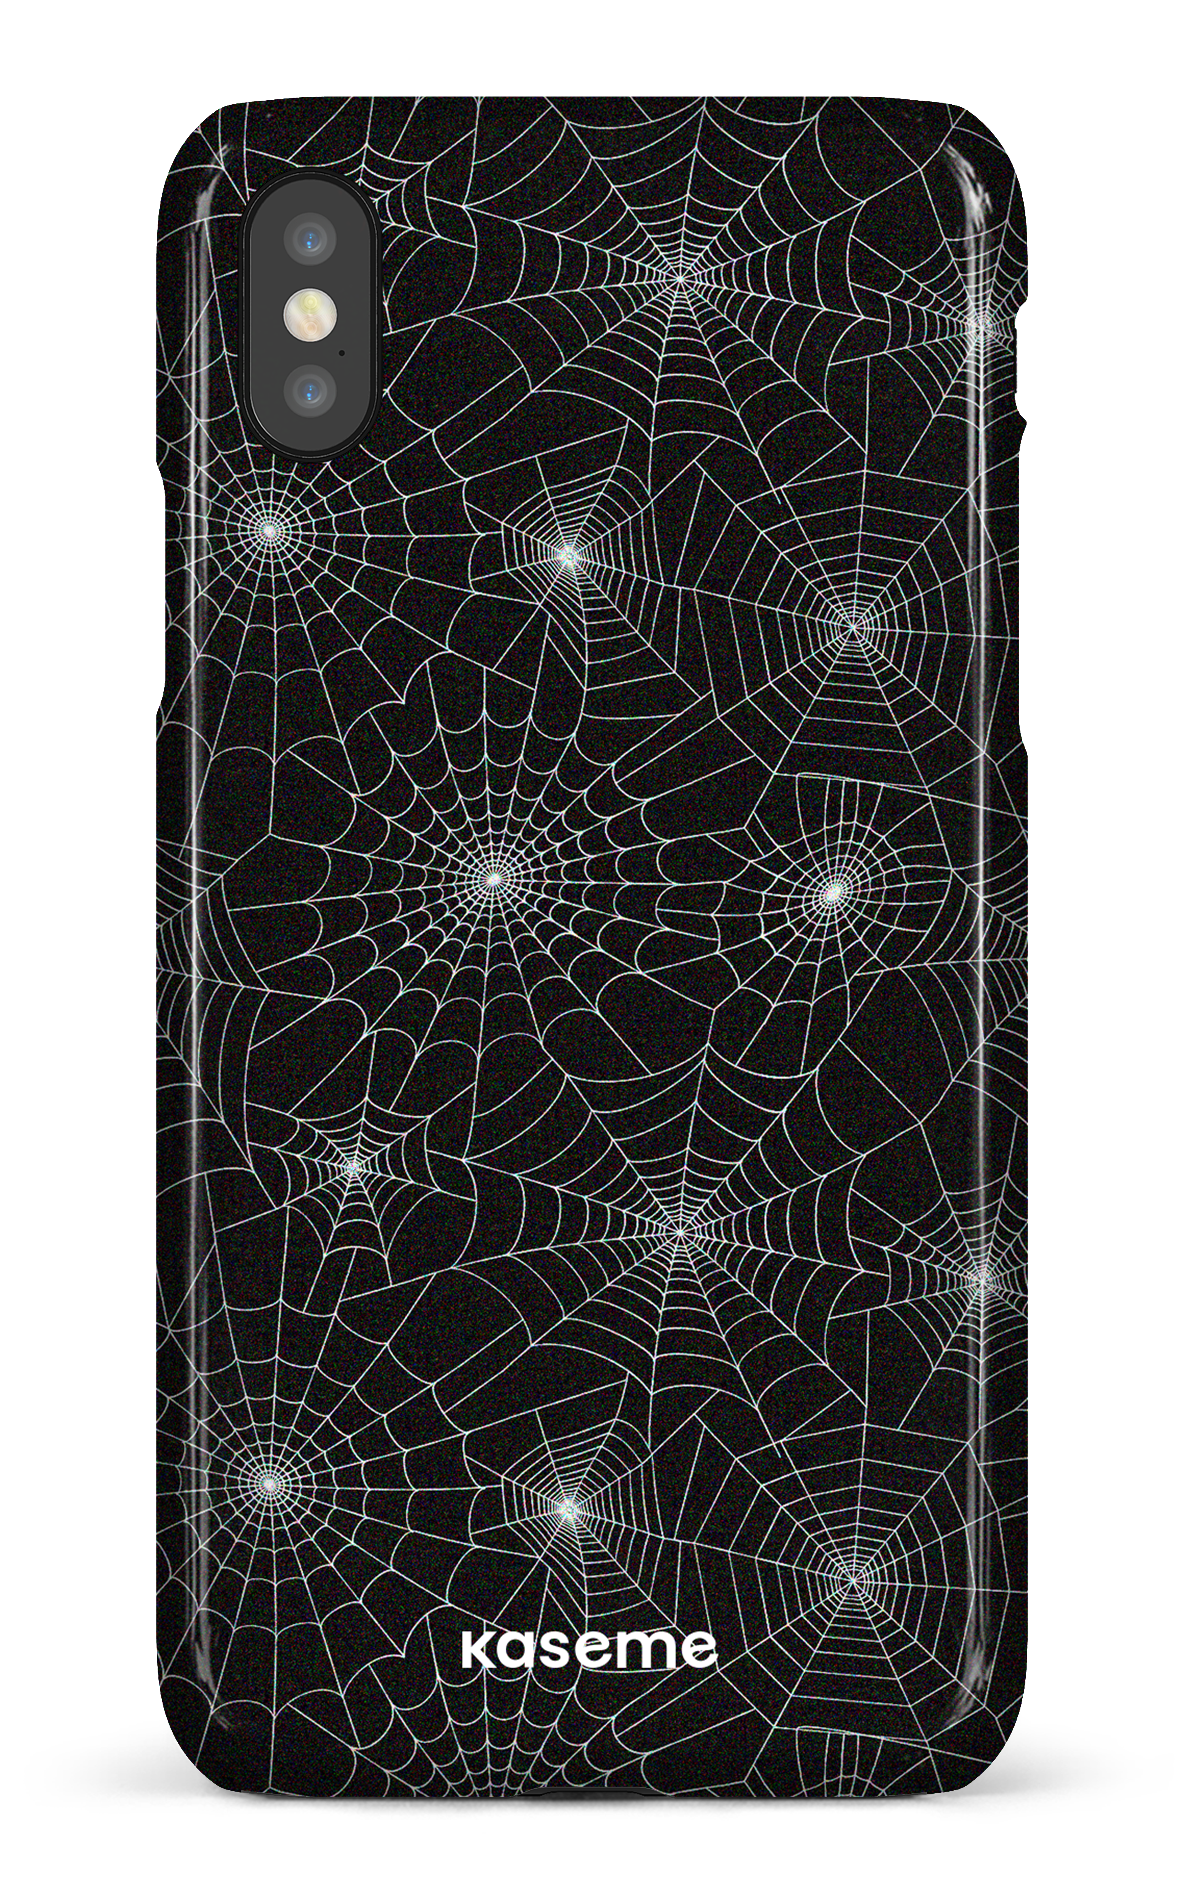 Spider - iPhone X/Xs